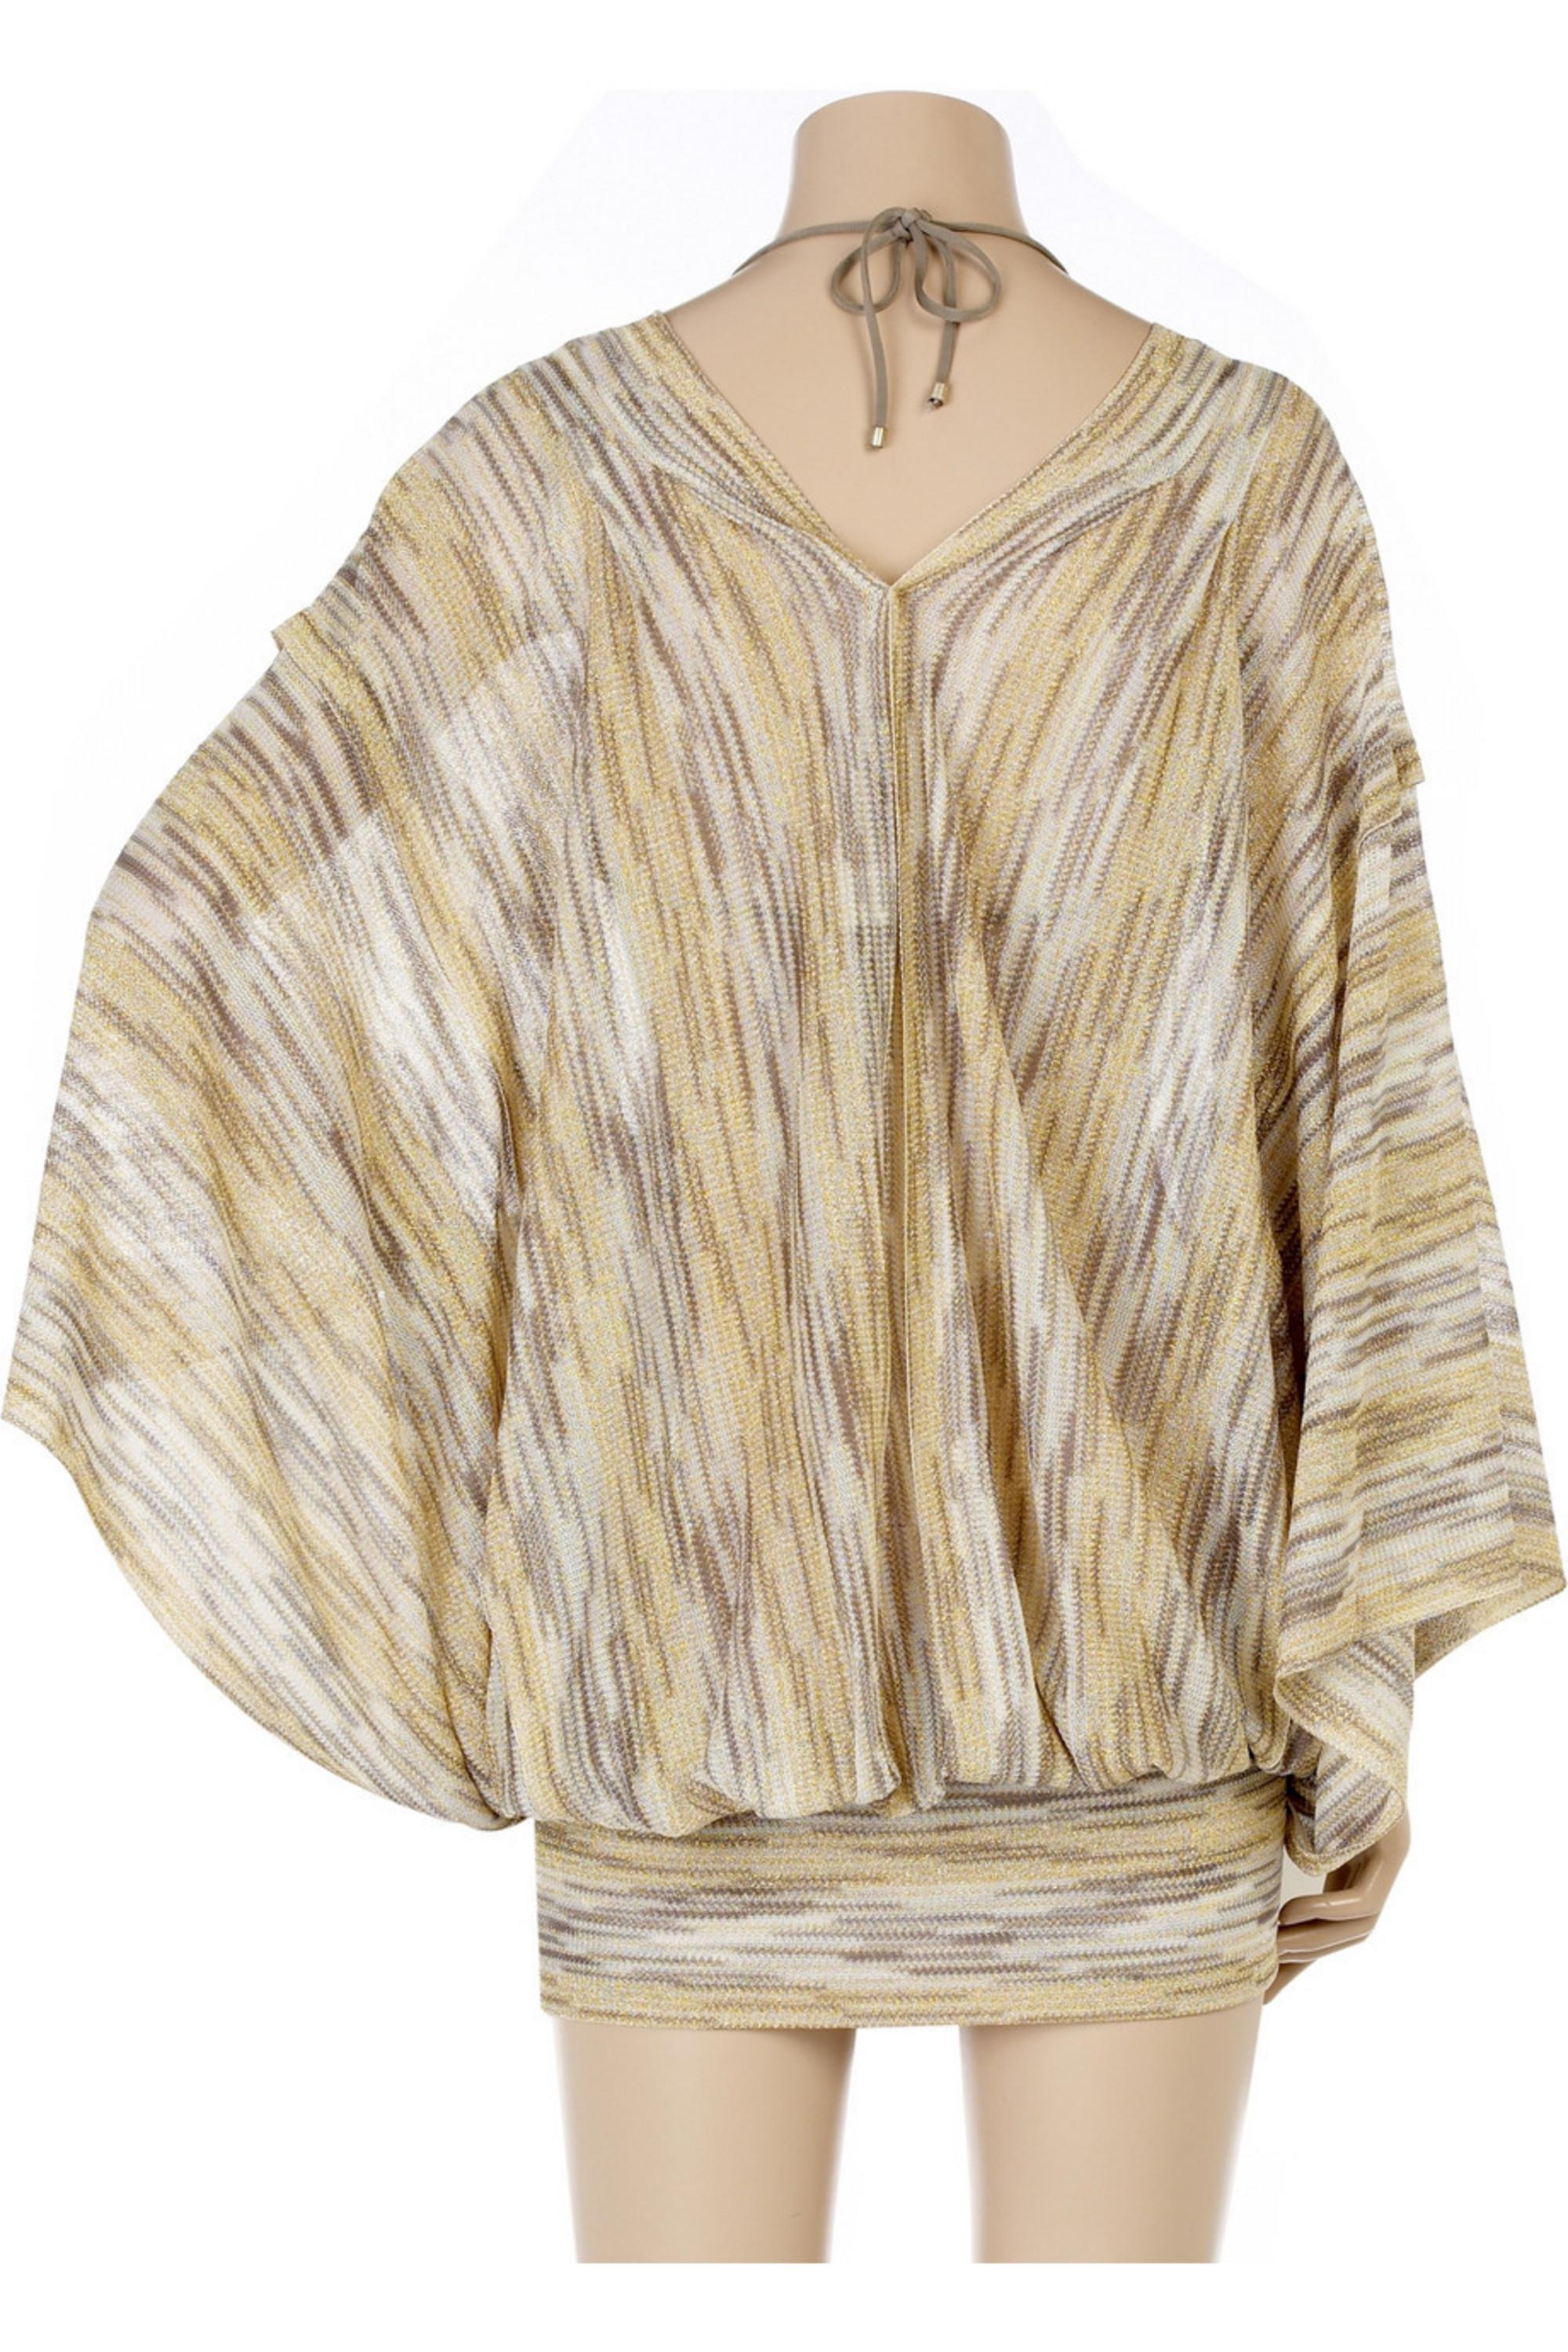 NEW Missoni Gold Metallic Signature Knit Dress Tunic Kaftan Cover Up 2